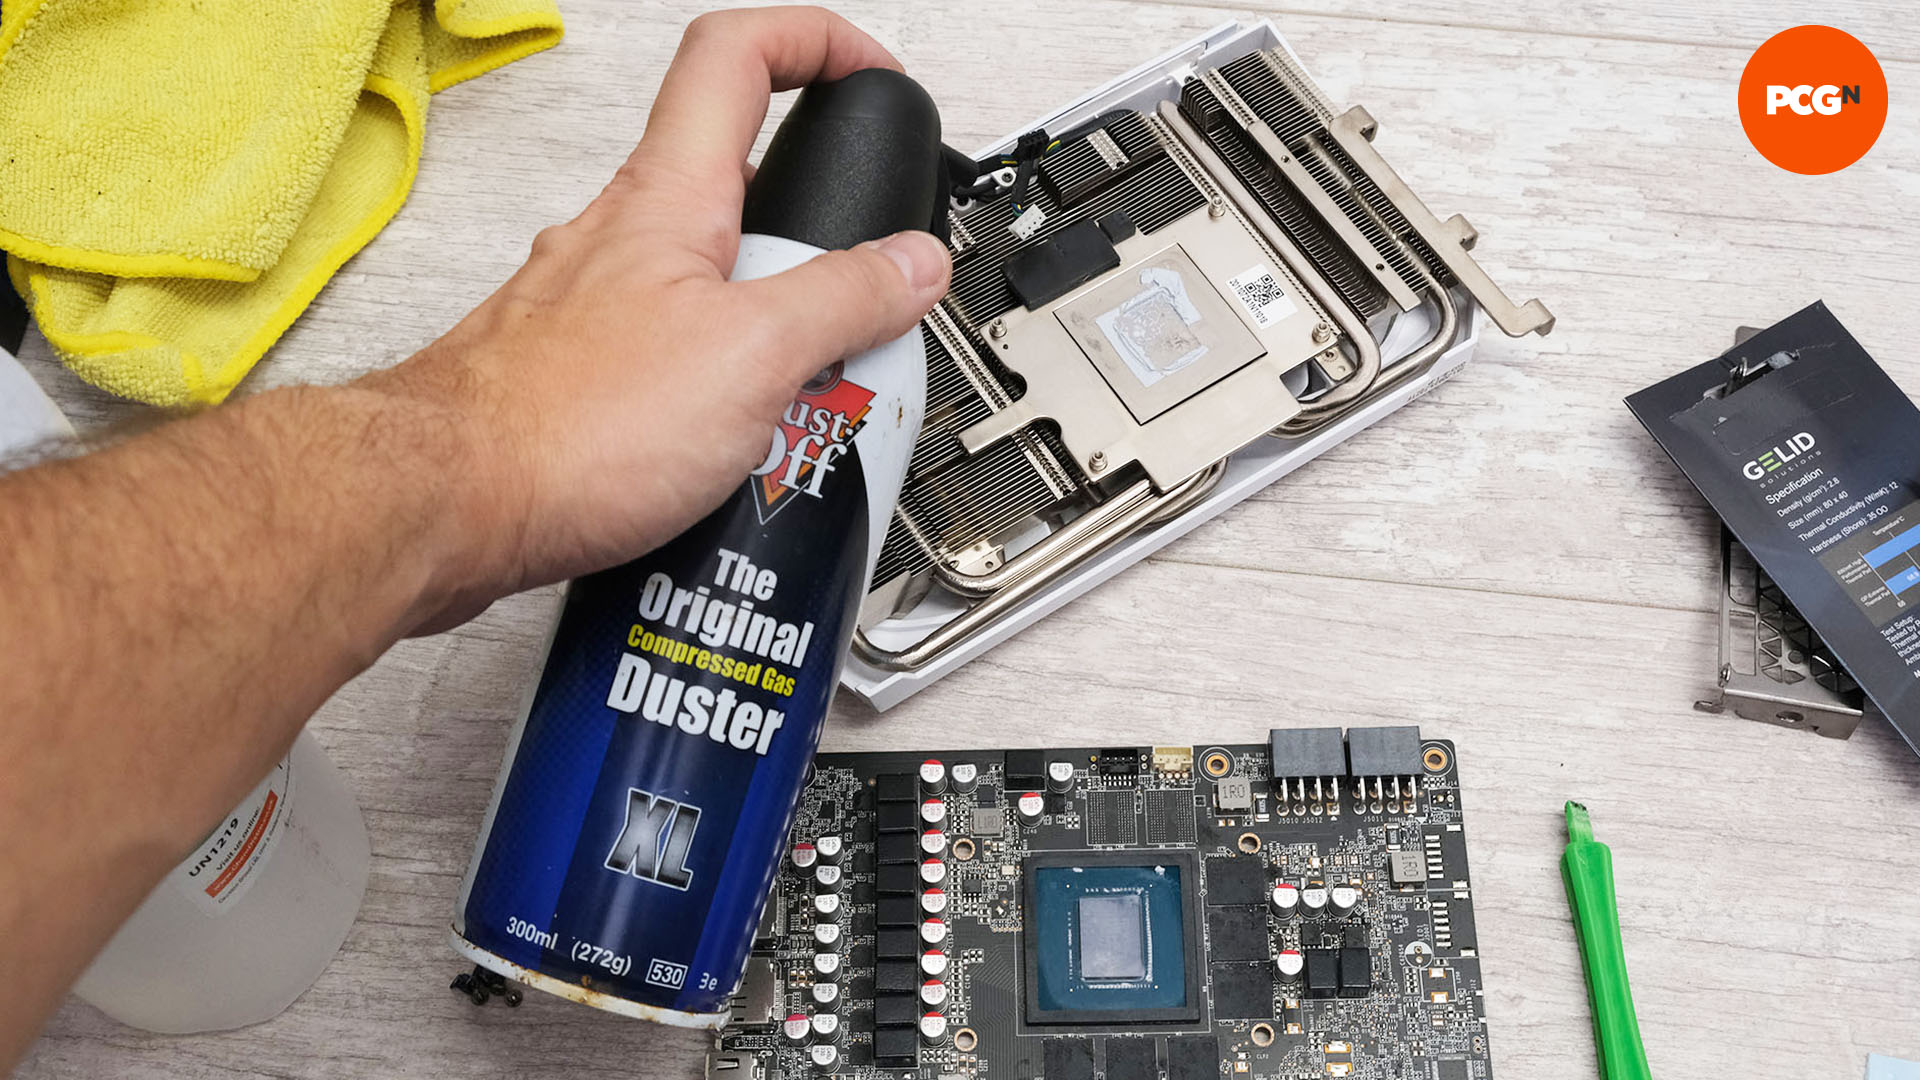 How to lower GPU temp: Clean heatsink with compressed air